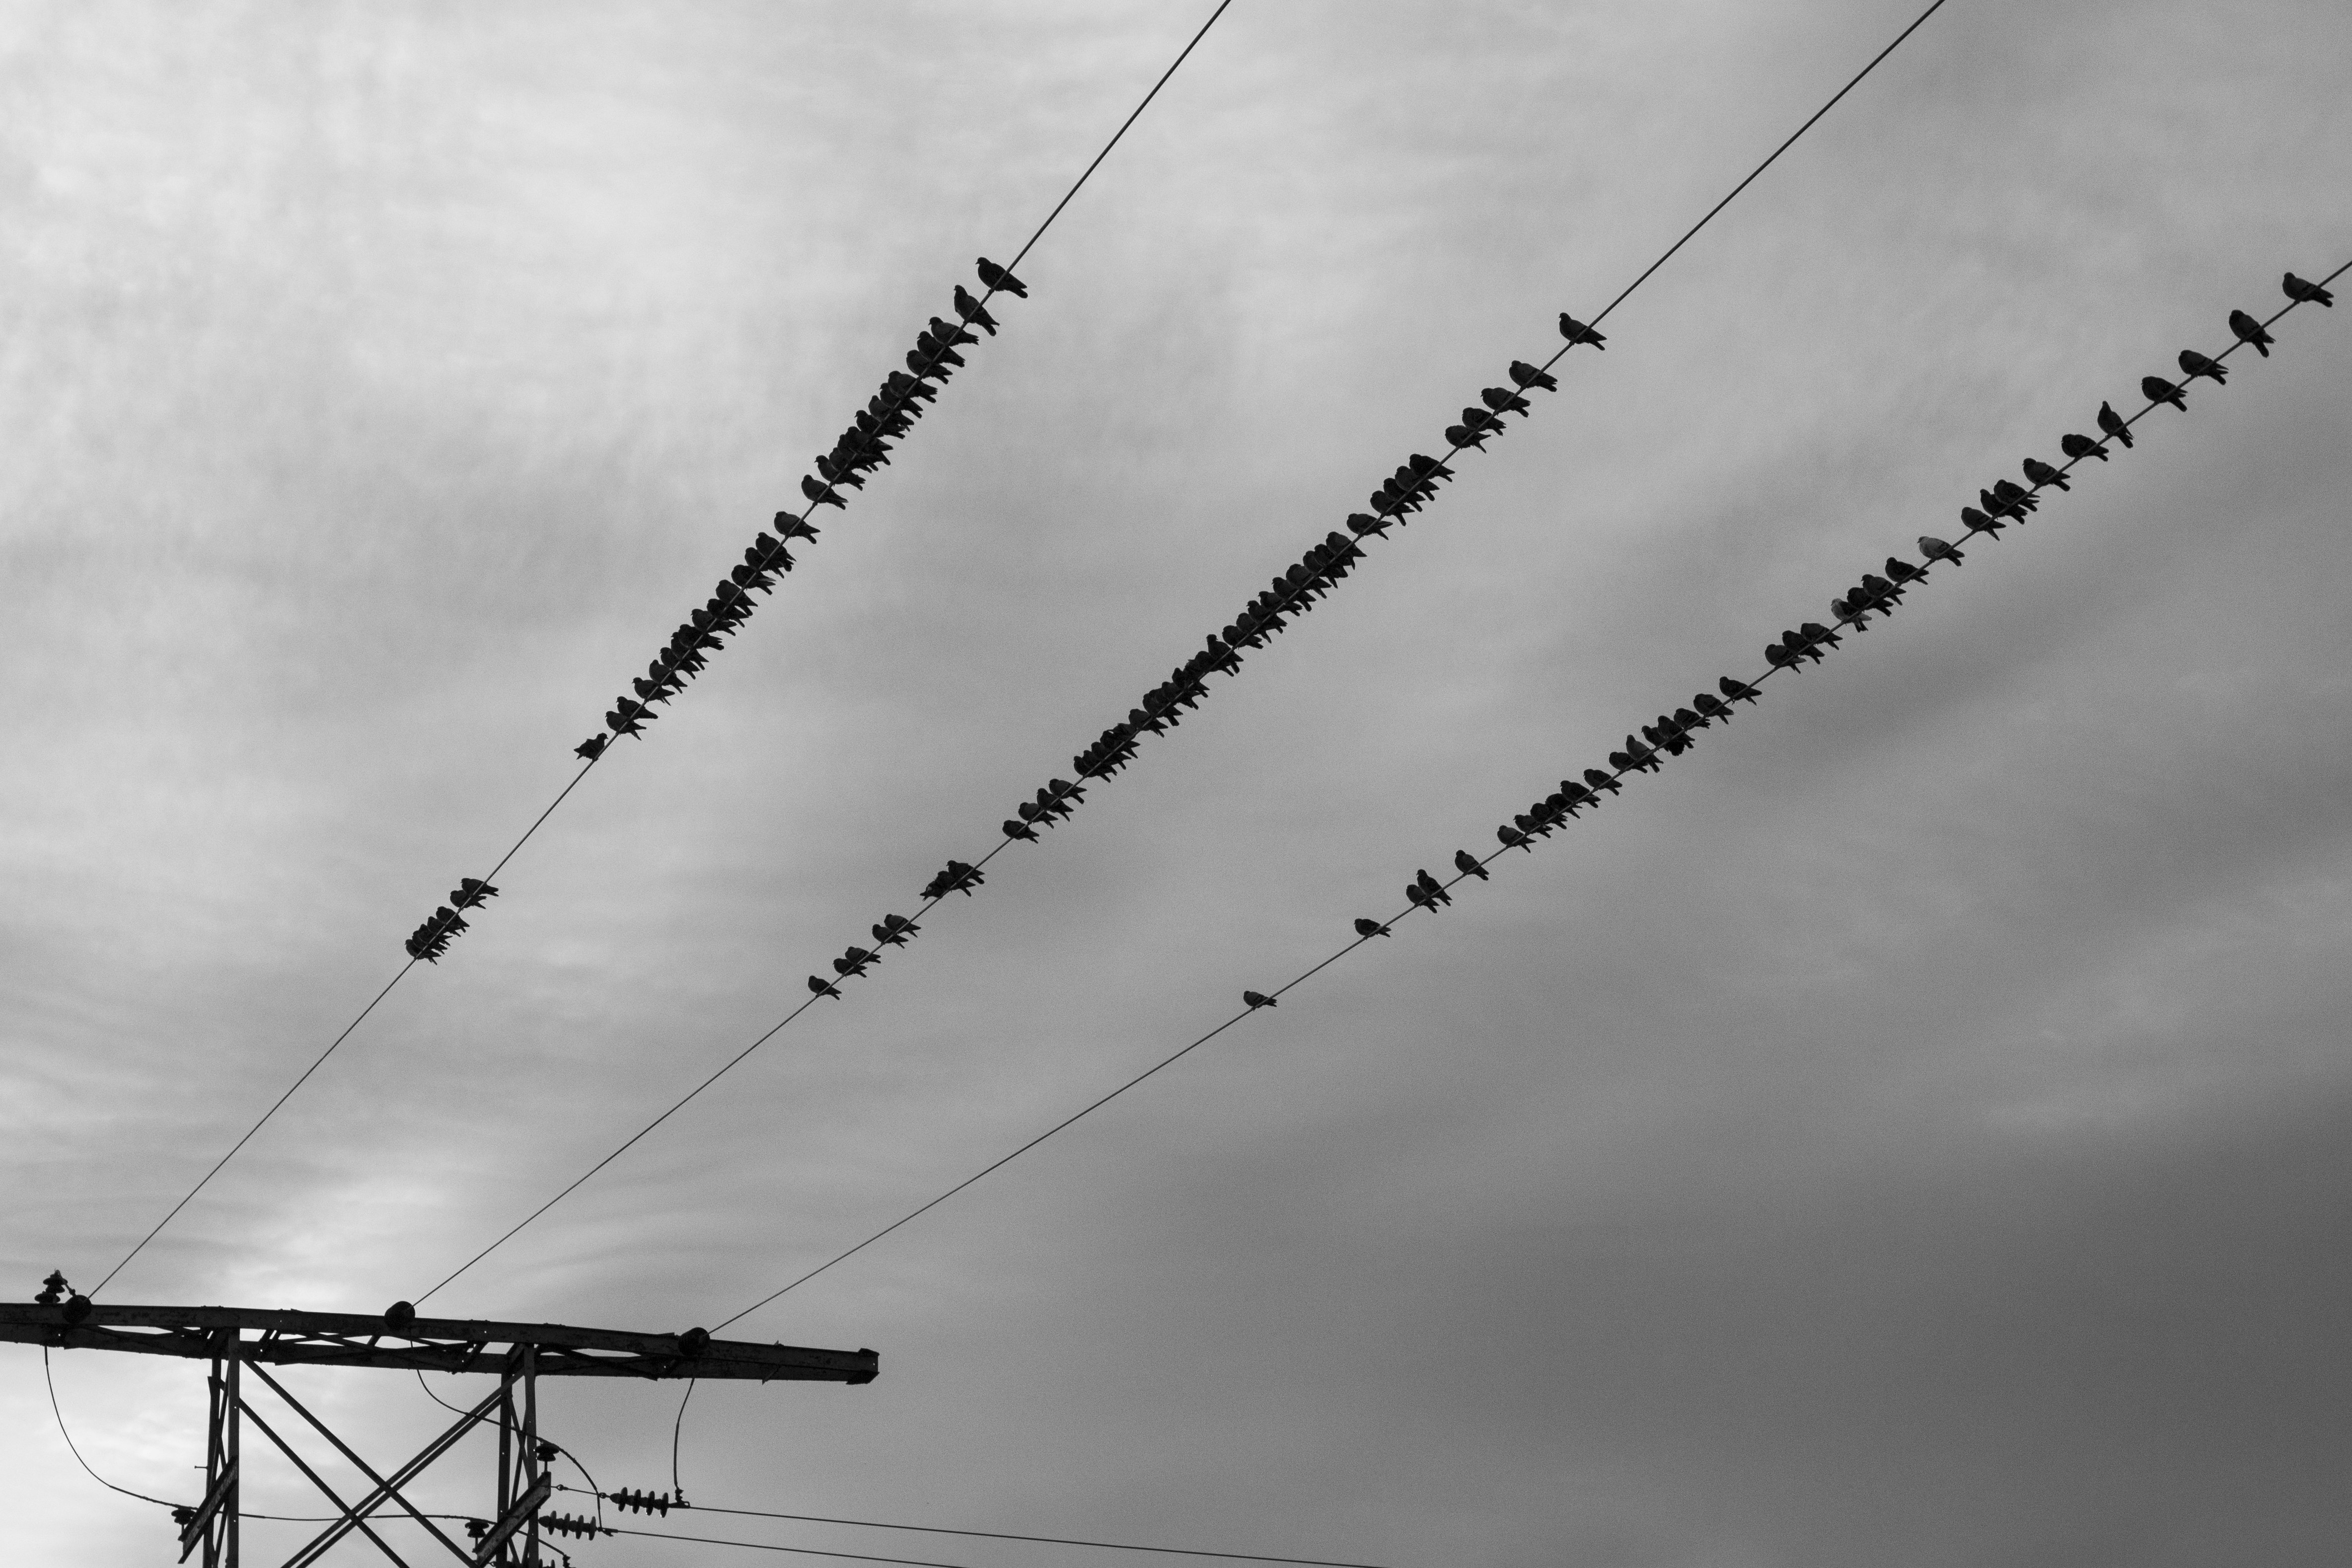 assorted bird lot under the cloudy sky